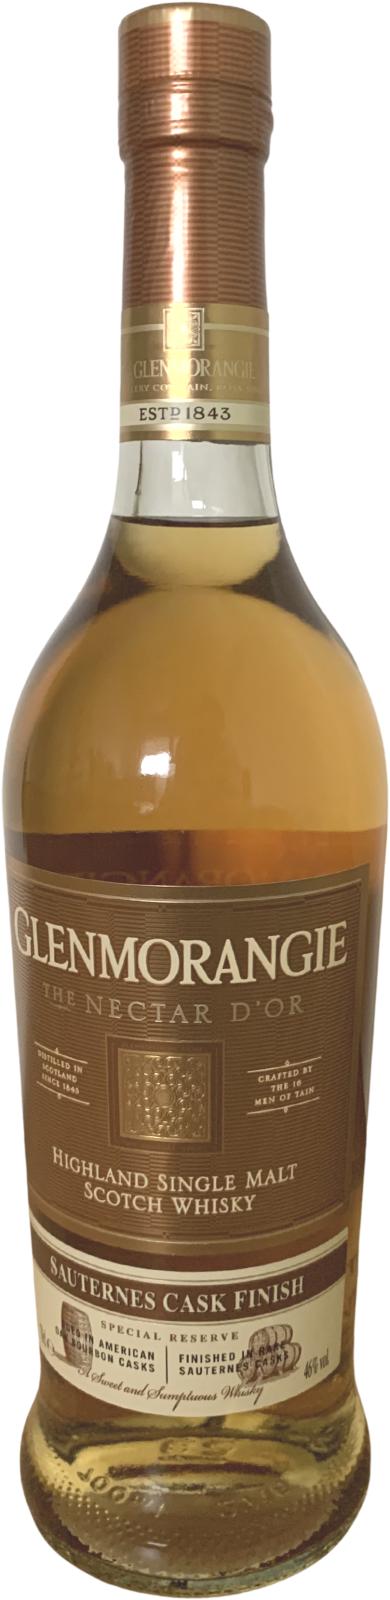 Glenmorangie Nectar D'Òr Sauternes Cask Finish - Special Reserve  2021 Release Single Malt Scotch Whisky | 700ML